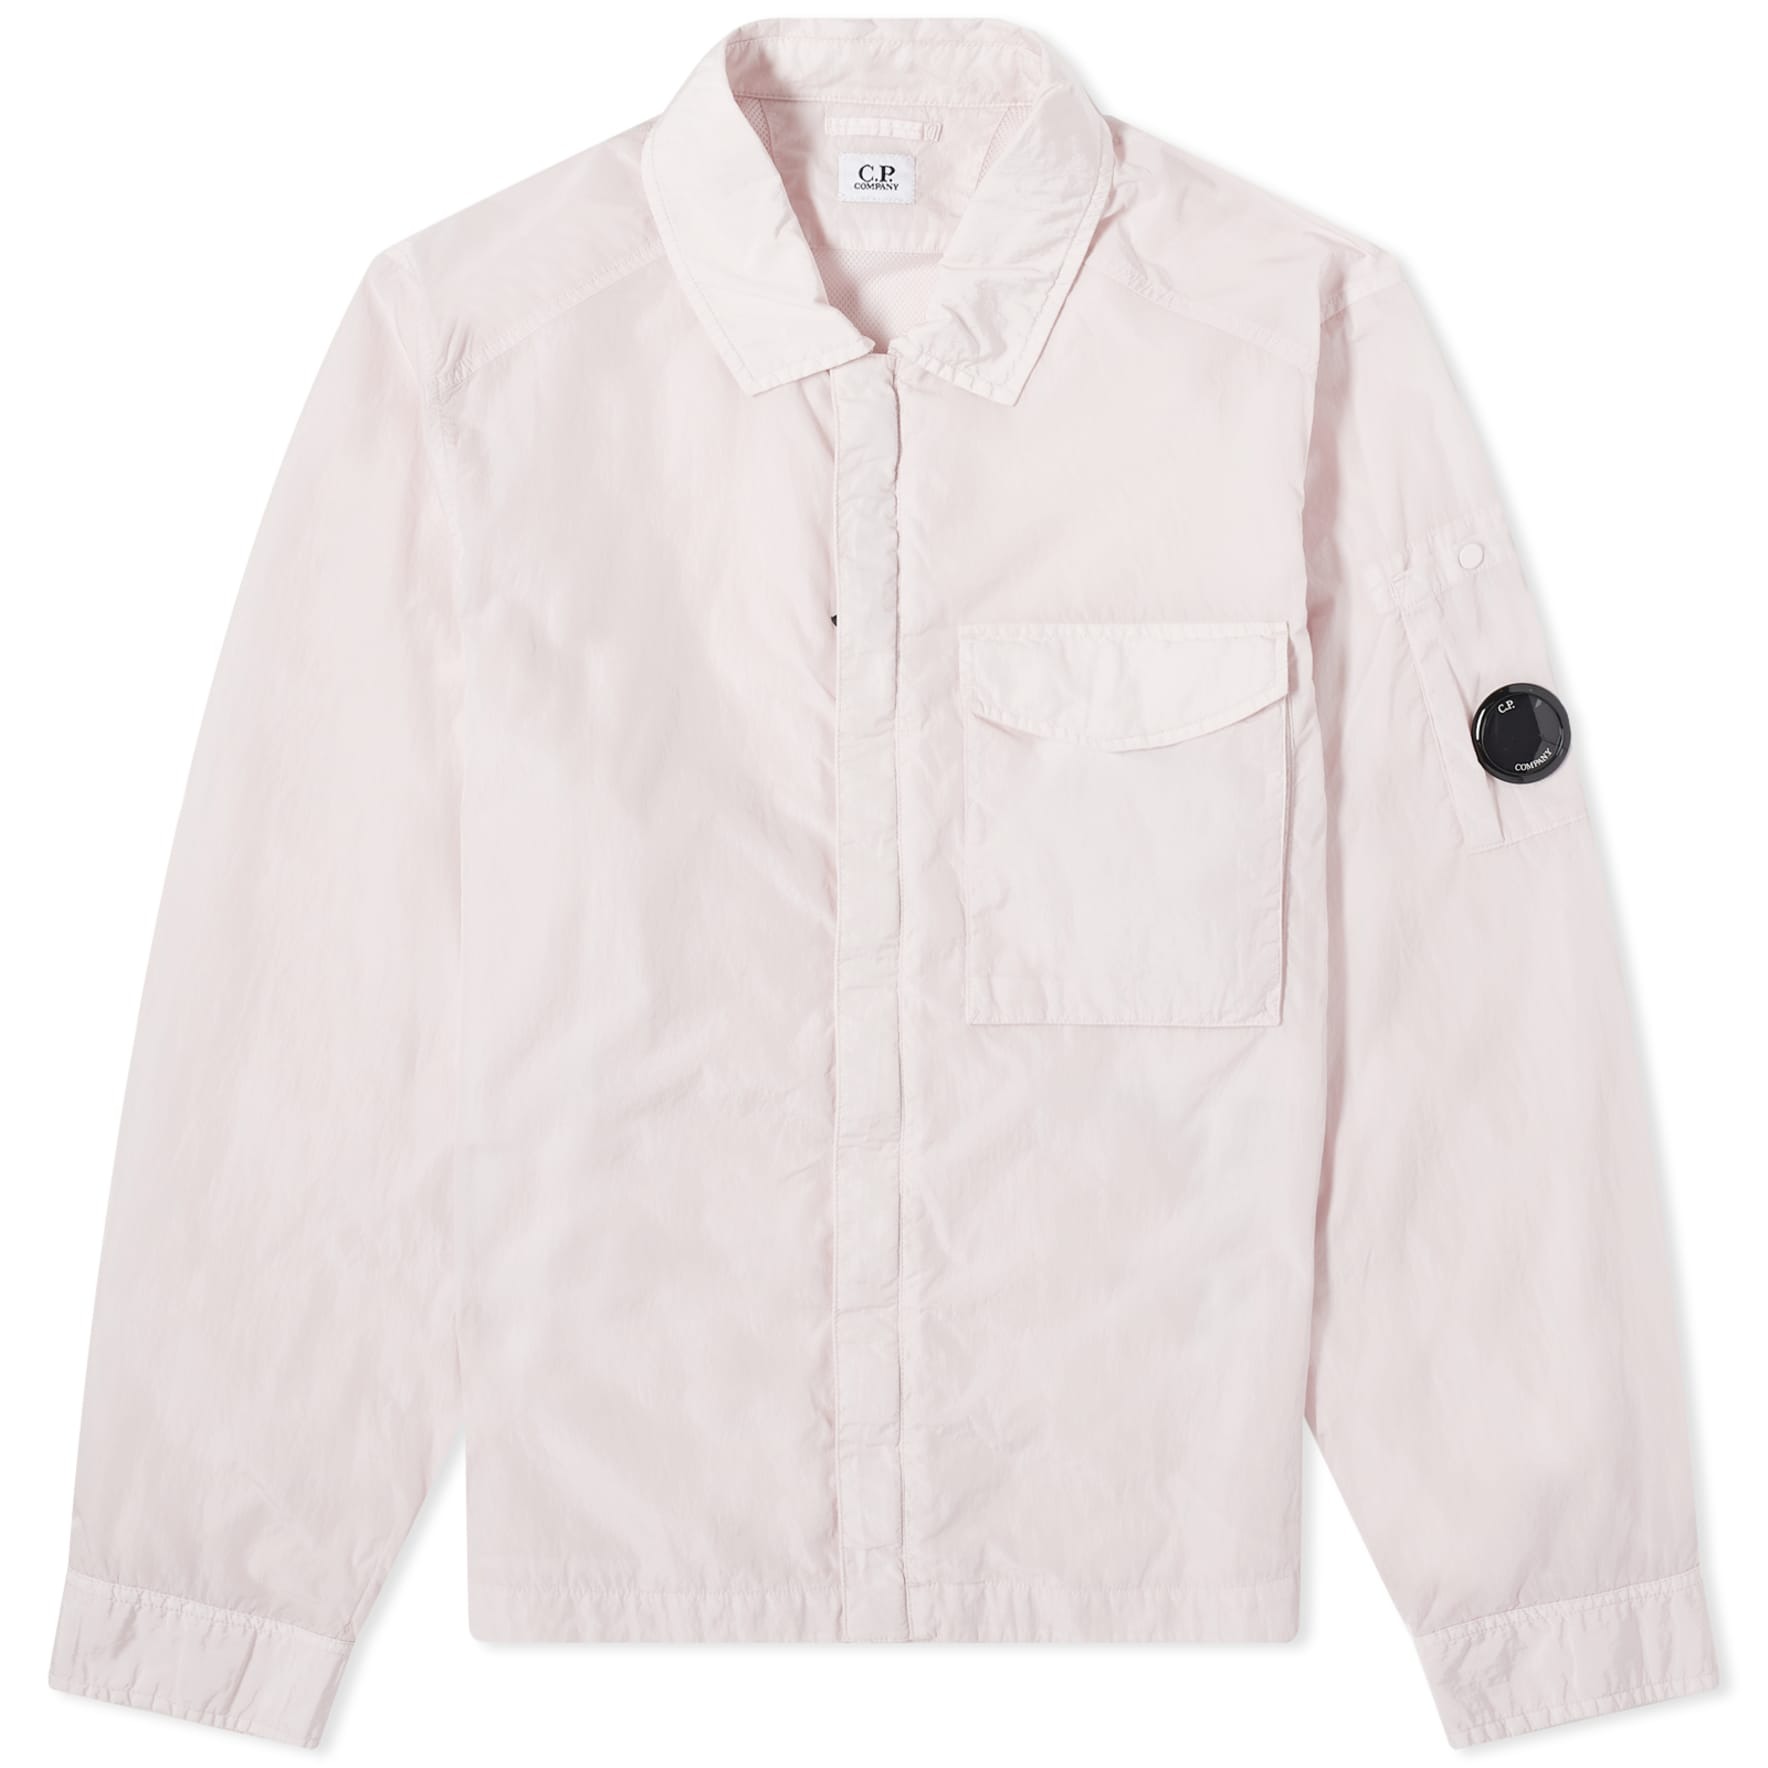 Куртка-рубашка C.P. Company Chrome-R Pocket, бледно-розовый куртка рубашка c p company chrome размер m зеленый